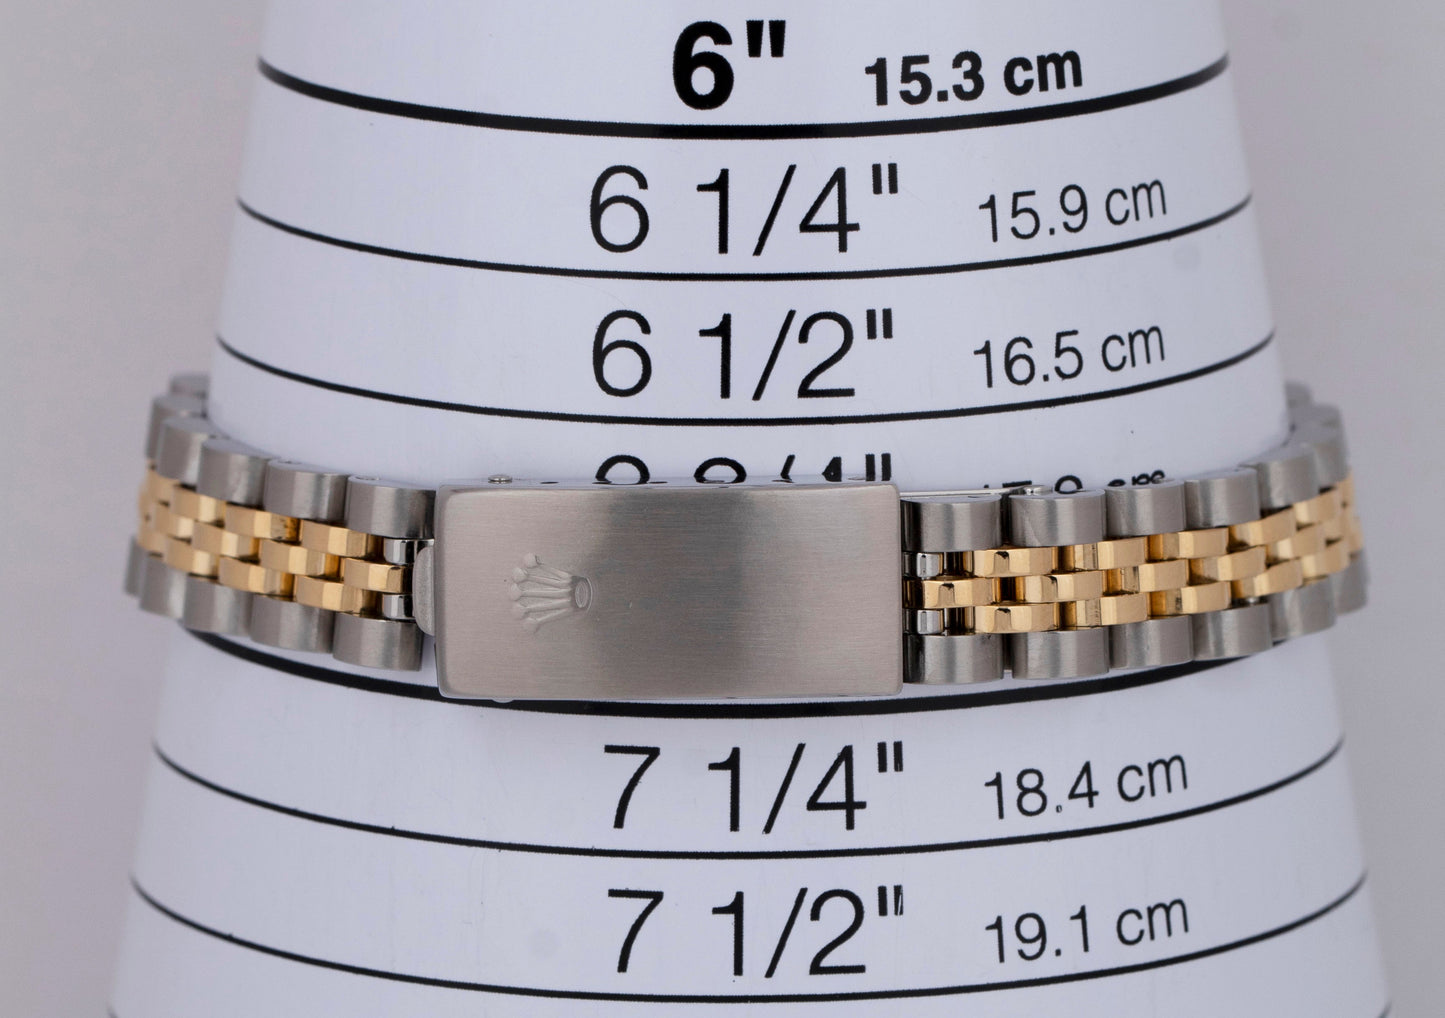 Rolex DateJust 26mm Champagne Two-Tone DIAMOND 18K Yellow Gold Steel Watch 69173